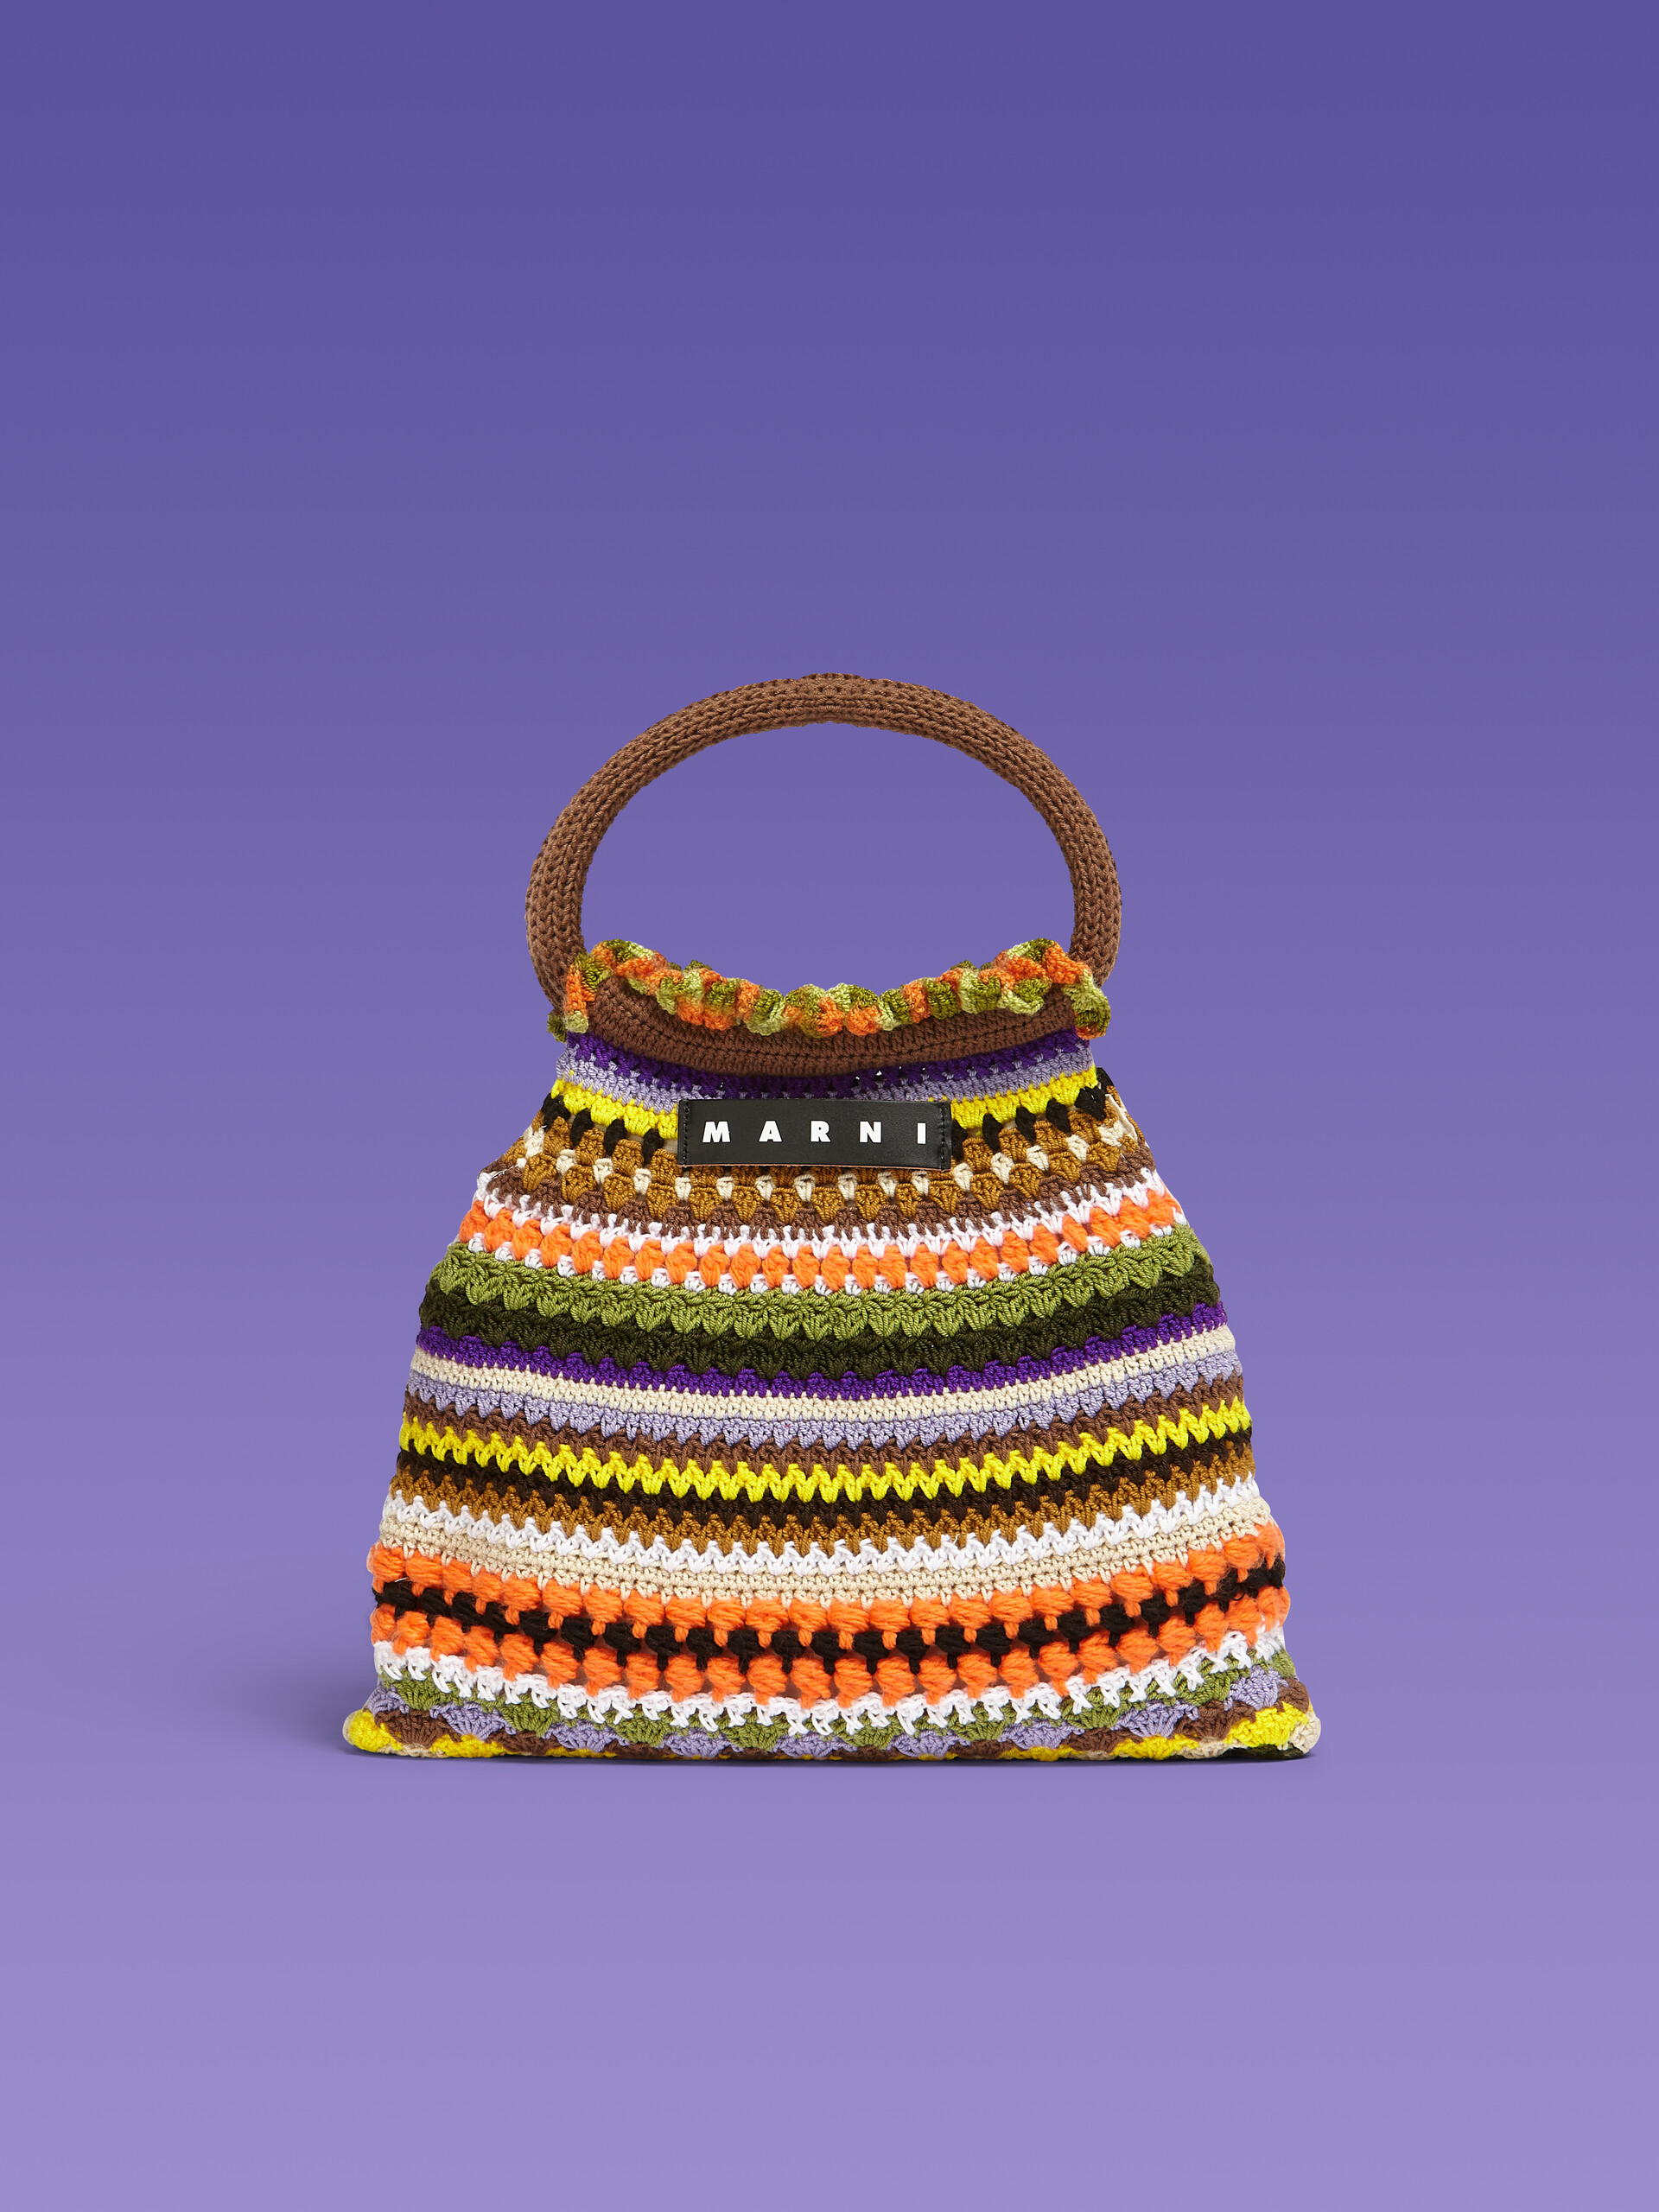 MARNI MARKET GRANNY bag in brown crochet - Furniture - Image 1